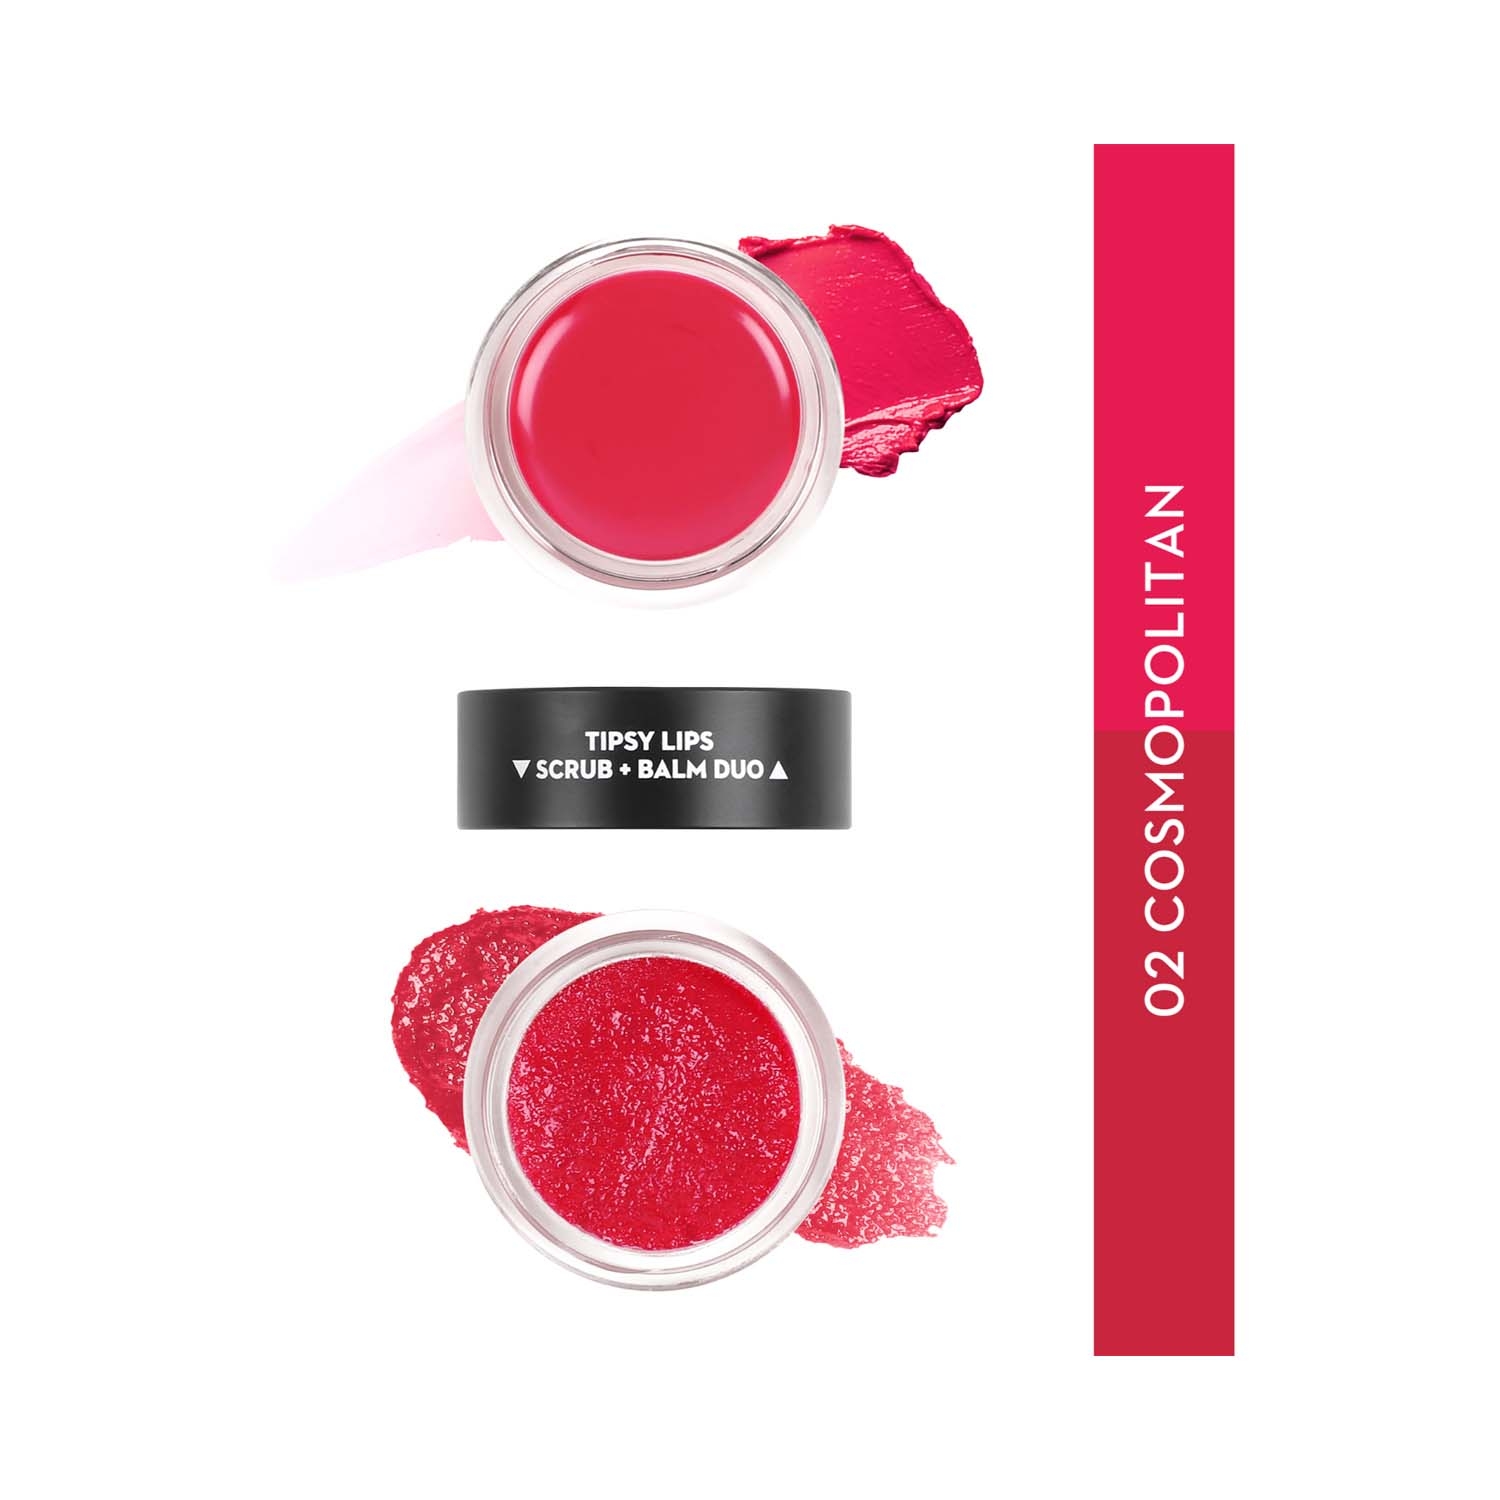 SUGAR Cosmetics | SUGAR Cosmetics Tipsy Lips Scrub + Balm Duo - 02 Cosmopolitan (10g)